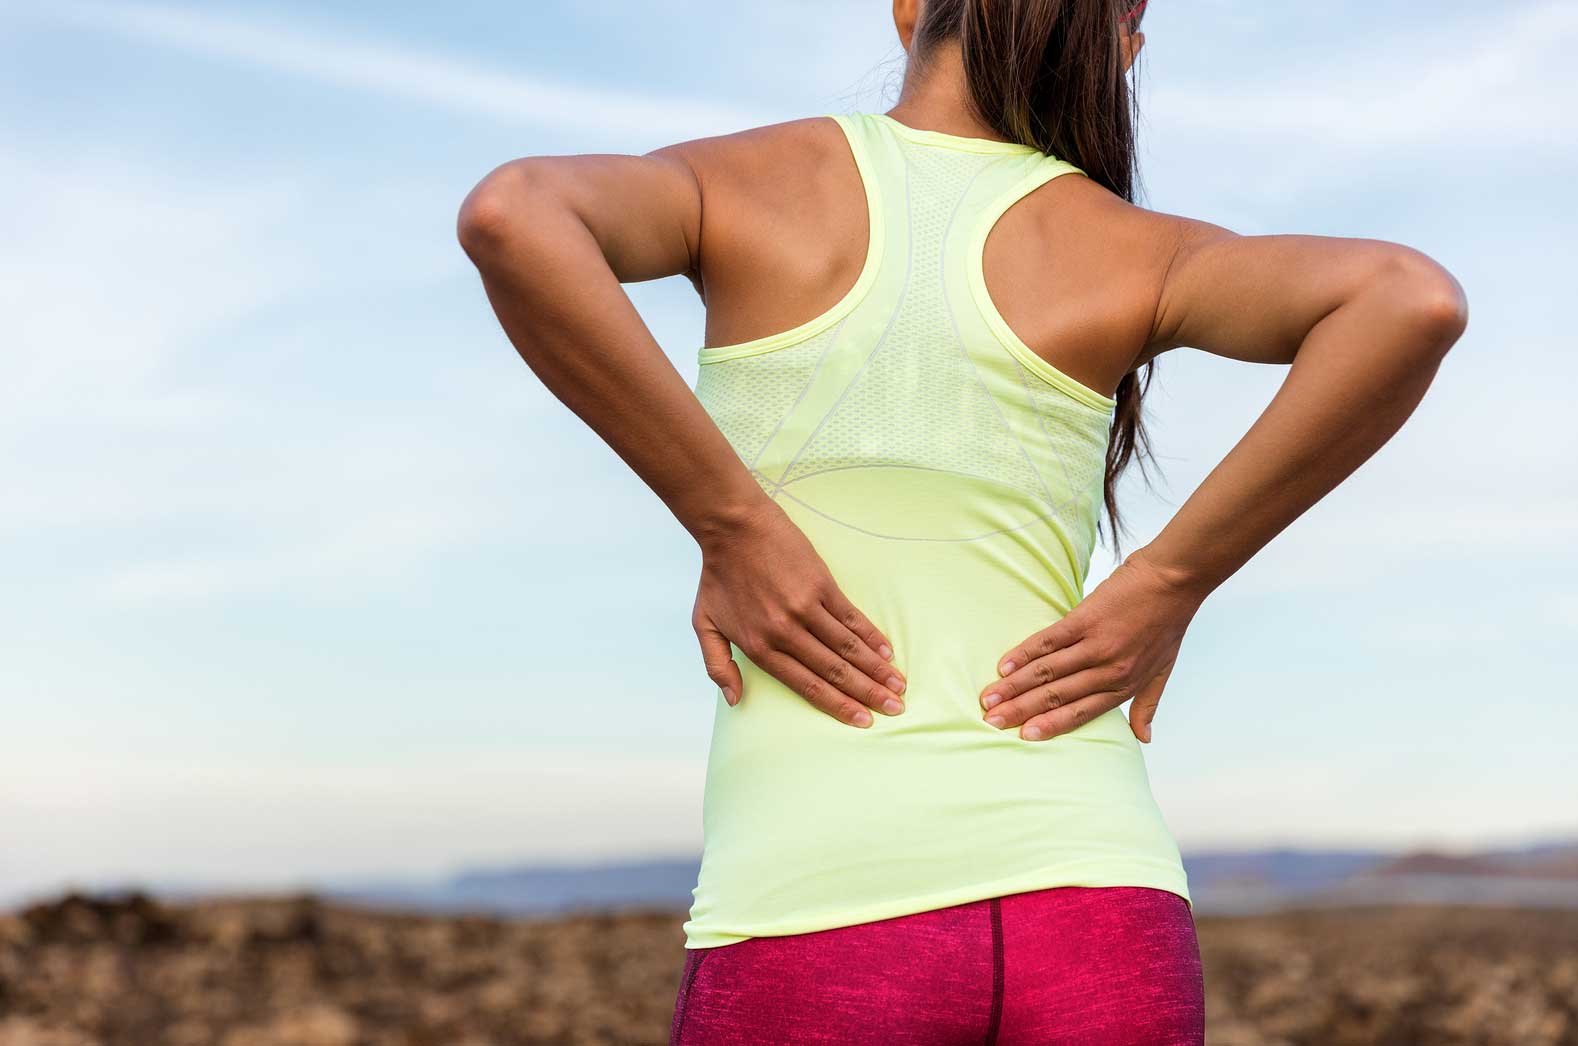 Posture impact on spine health